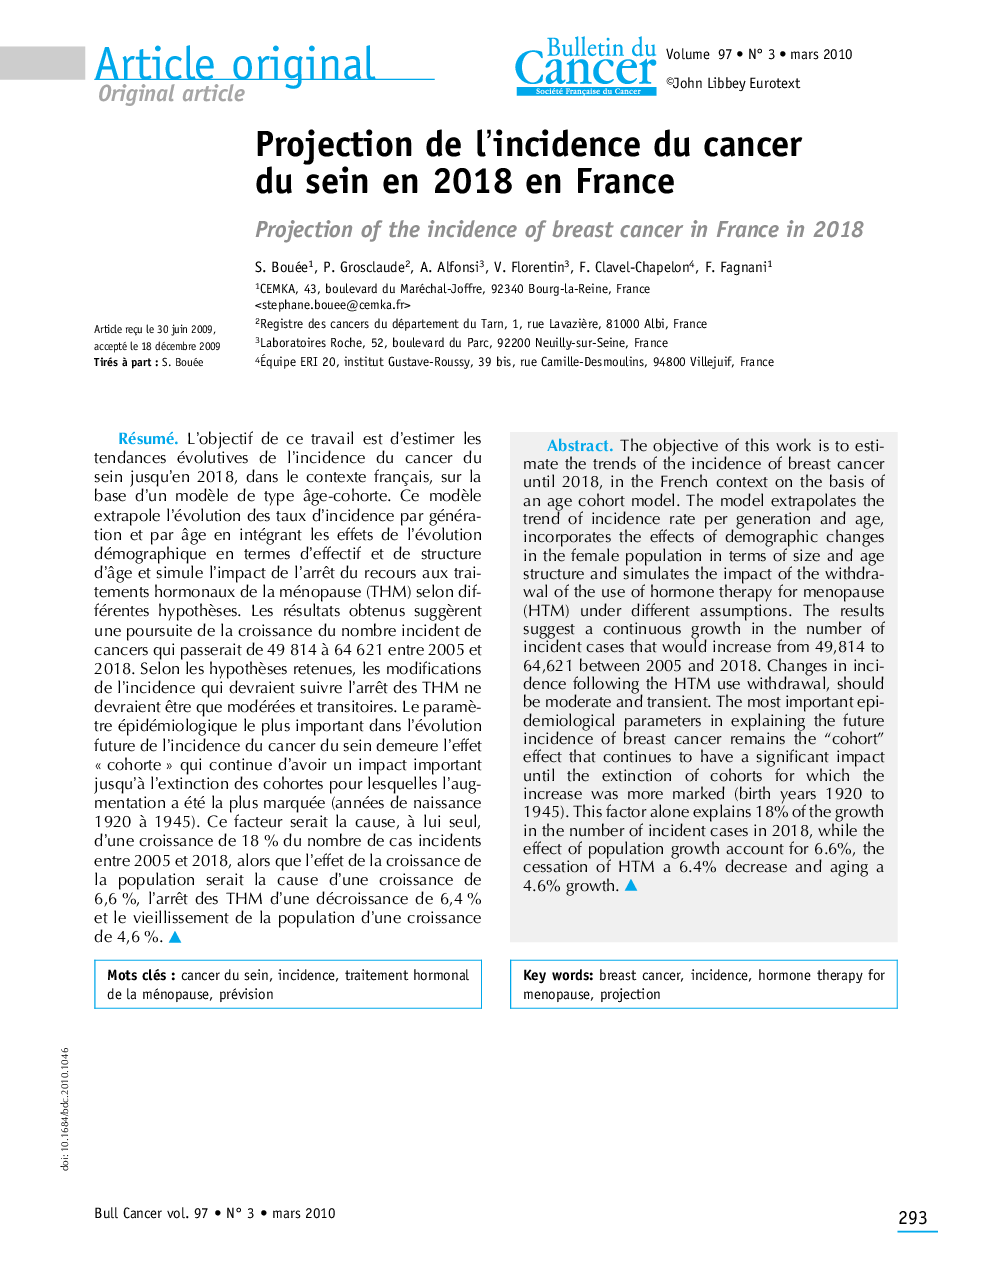 Projection de l'incidence du cancer du sein en 2018 en France